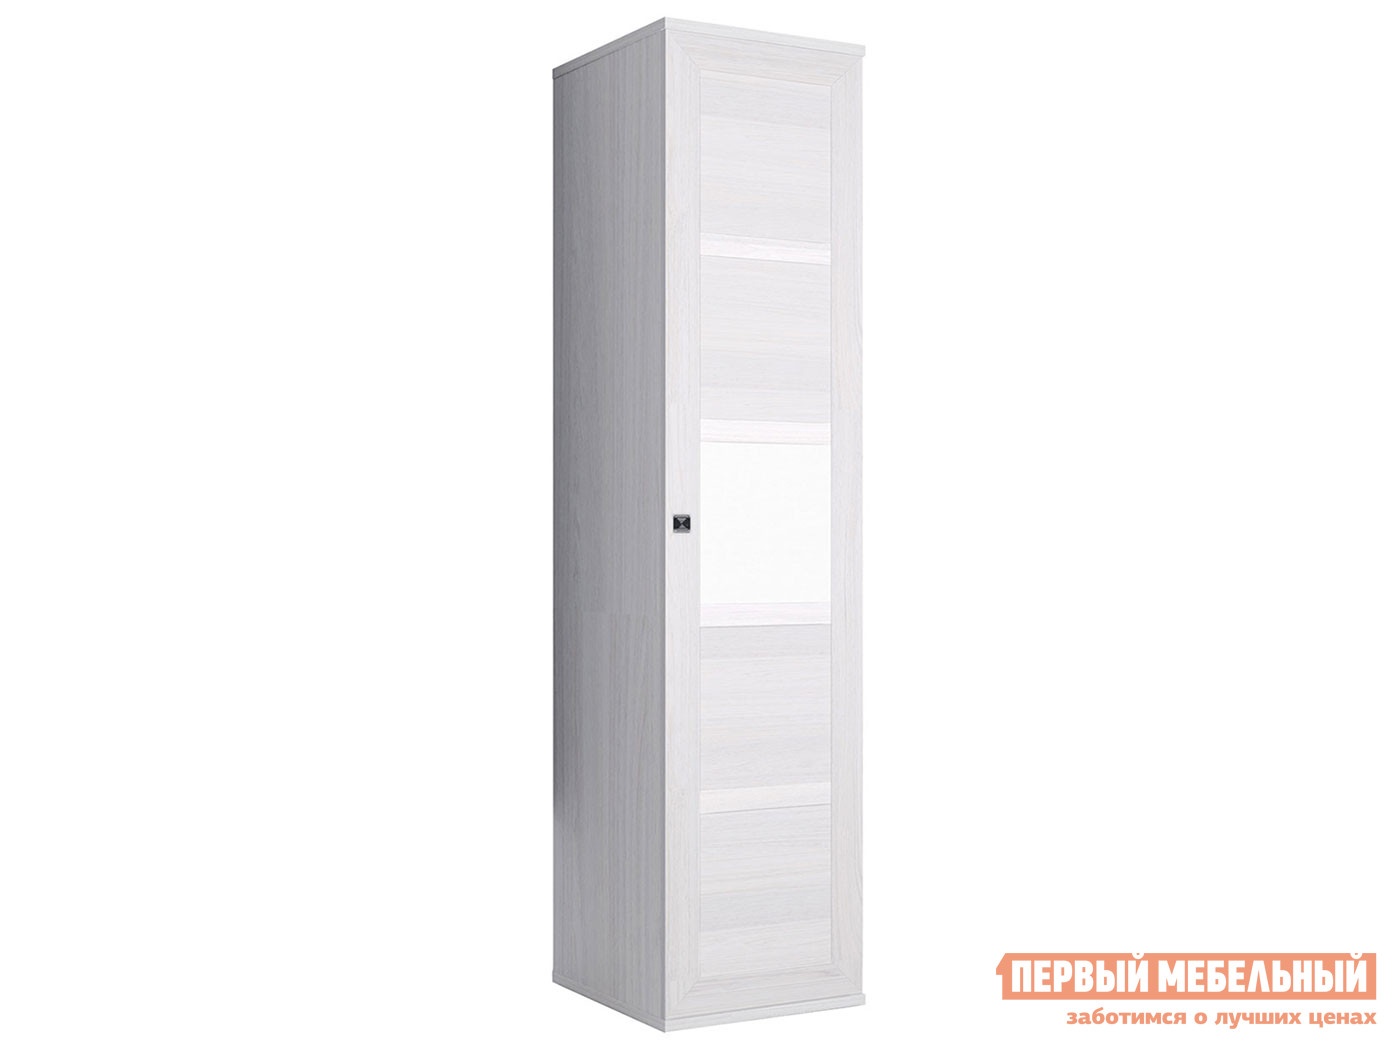 Распашной шкаф шкаф-пенал парма нео ясень анкор светлый экокожа белая, с глухим фасадом preview 1